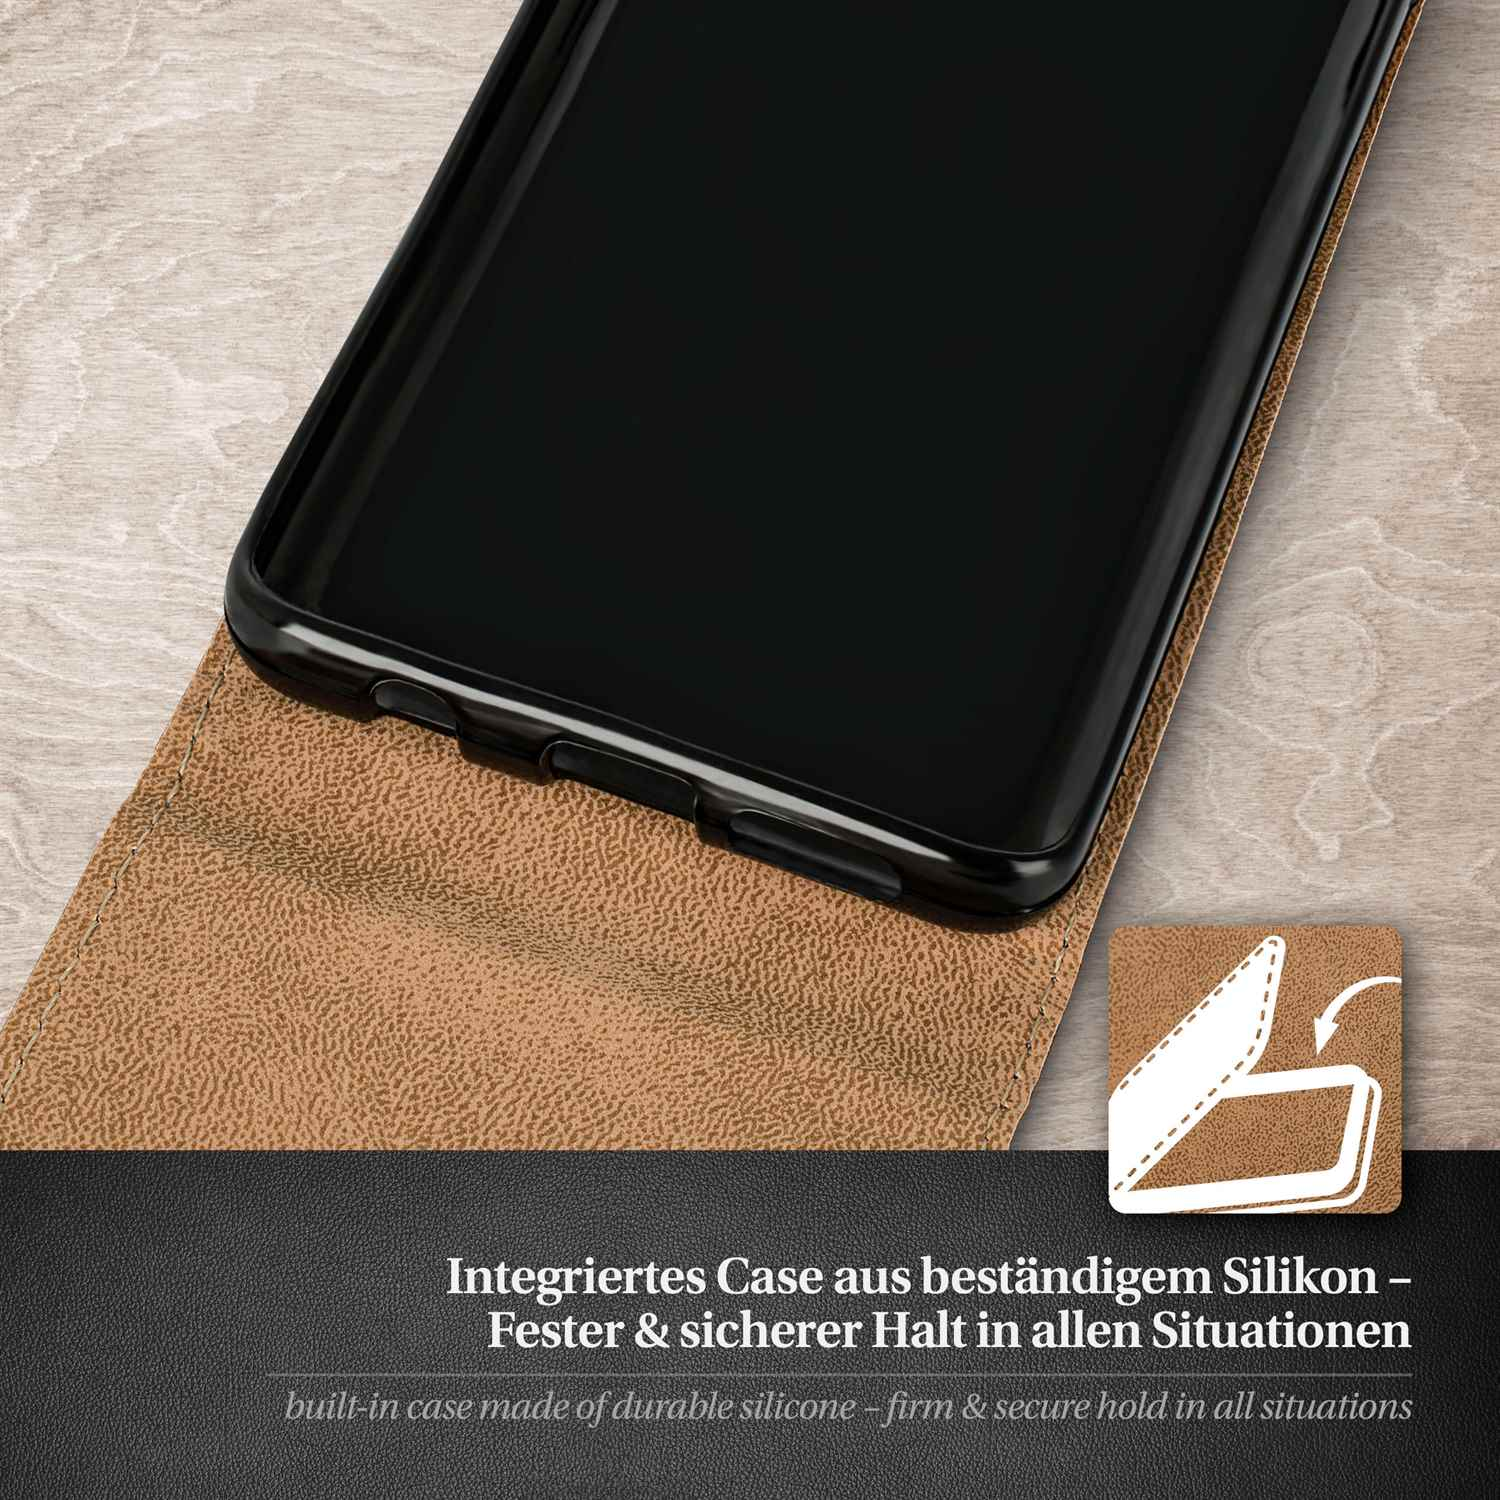 Case, Cover, MOEX Flip S7, Berry-Fuchsia Samsung, Galaxy Flip